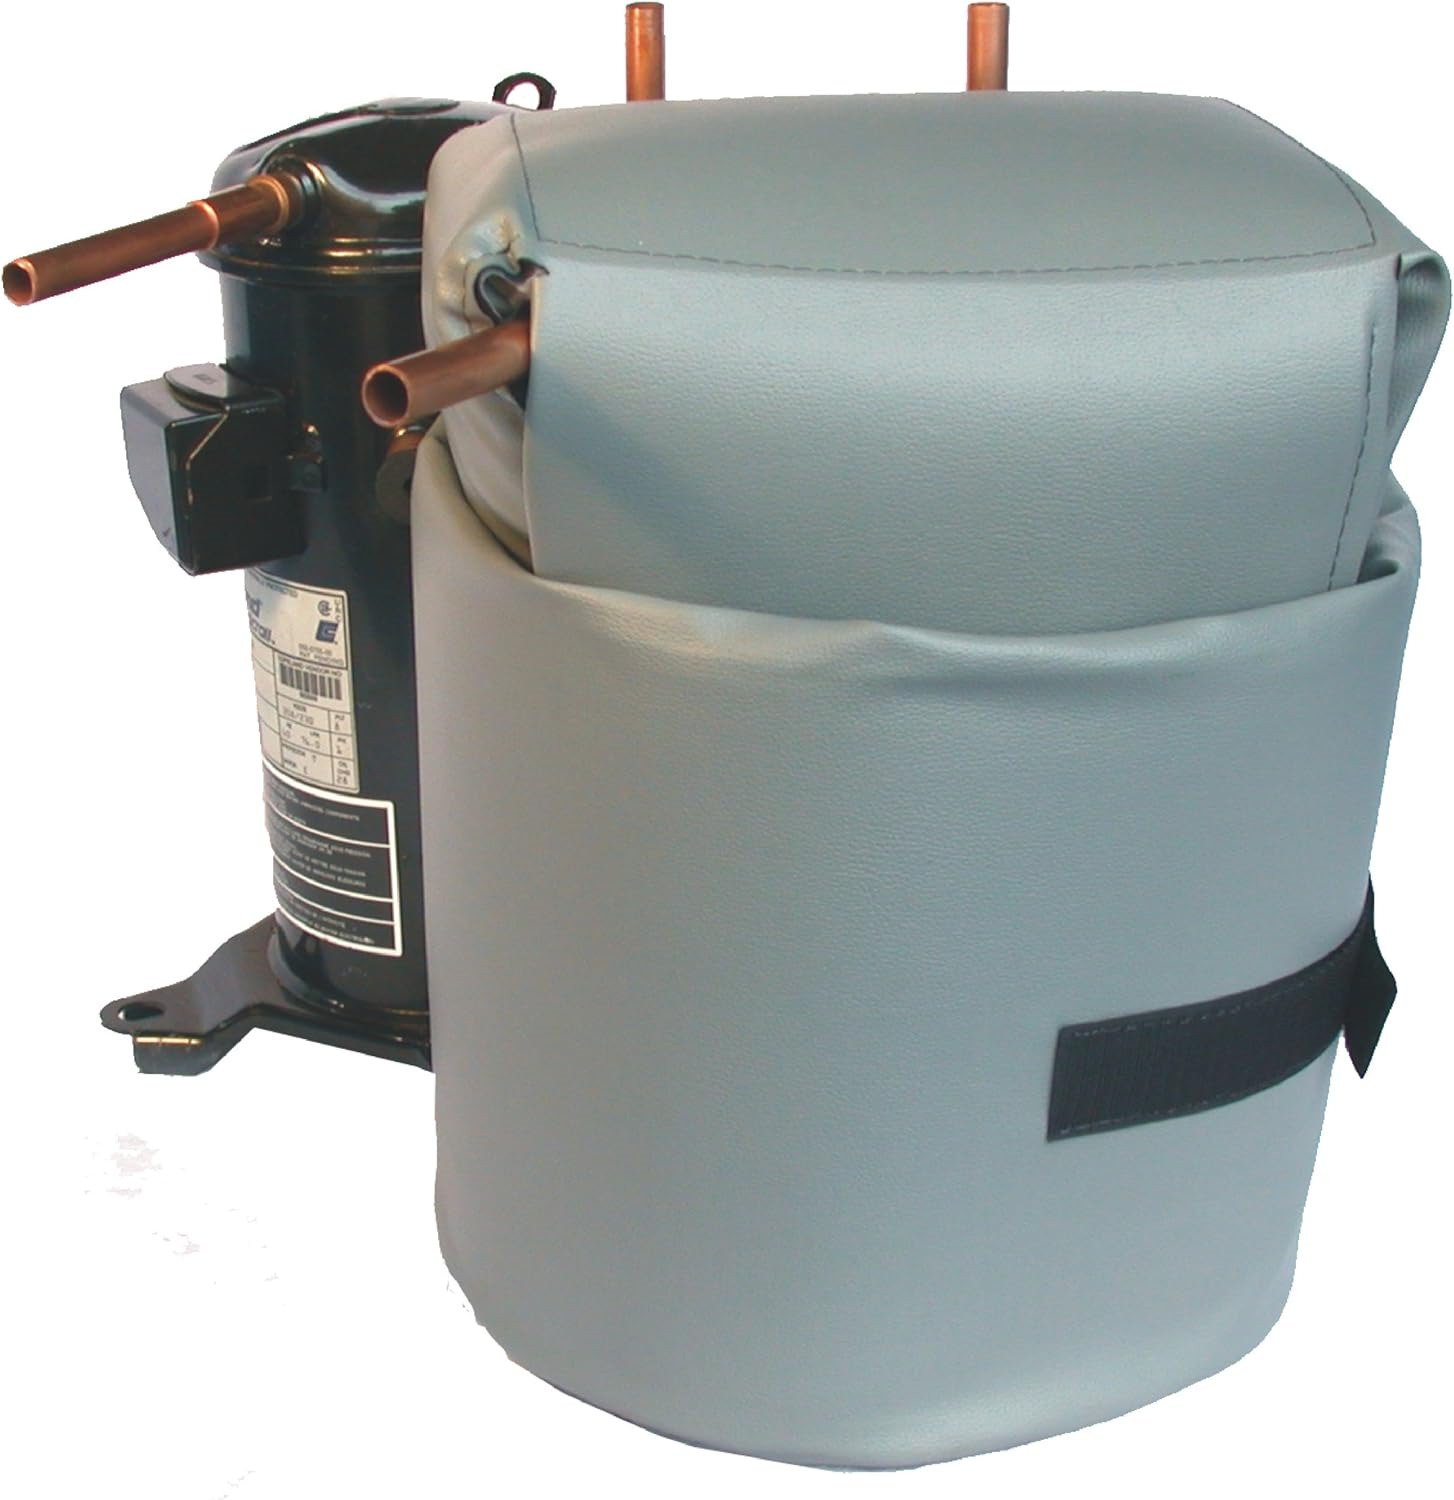 Brinmar SBUHD Universal-Fit Air Conditioner Compressor Sound Blanket Wrap #0421A